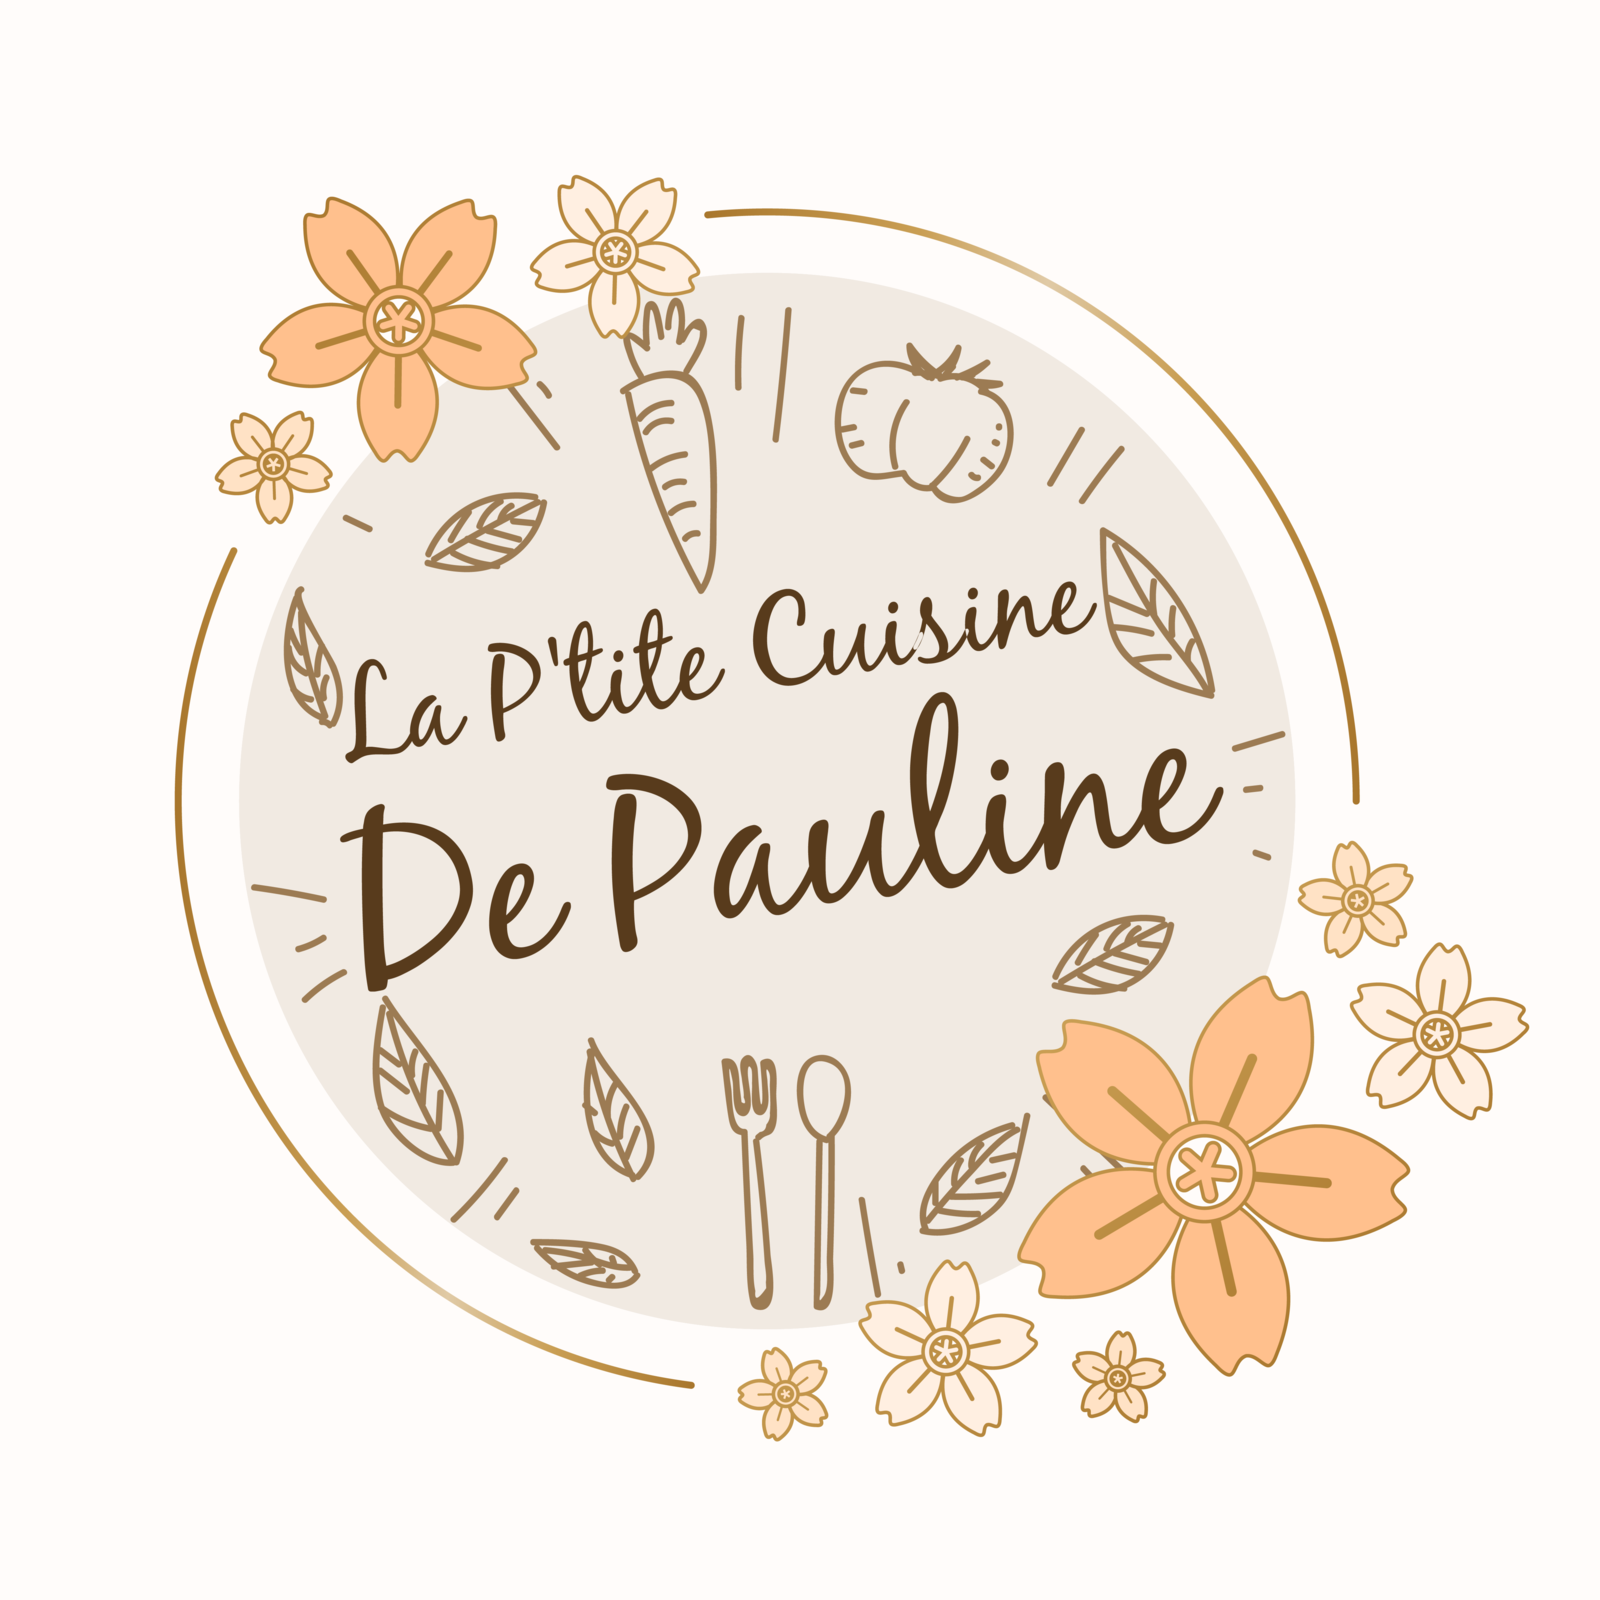 La P'tite cuisine de Pauline 